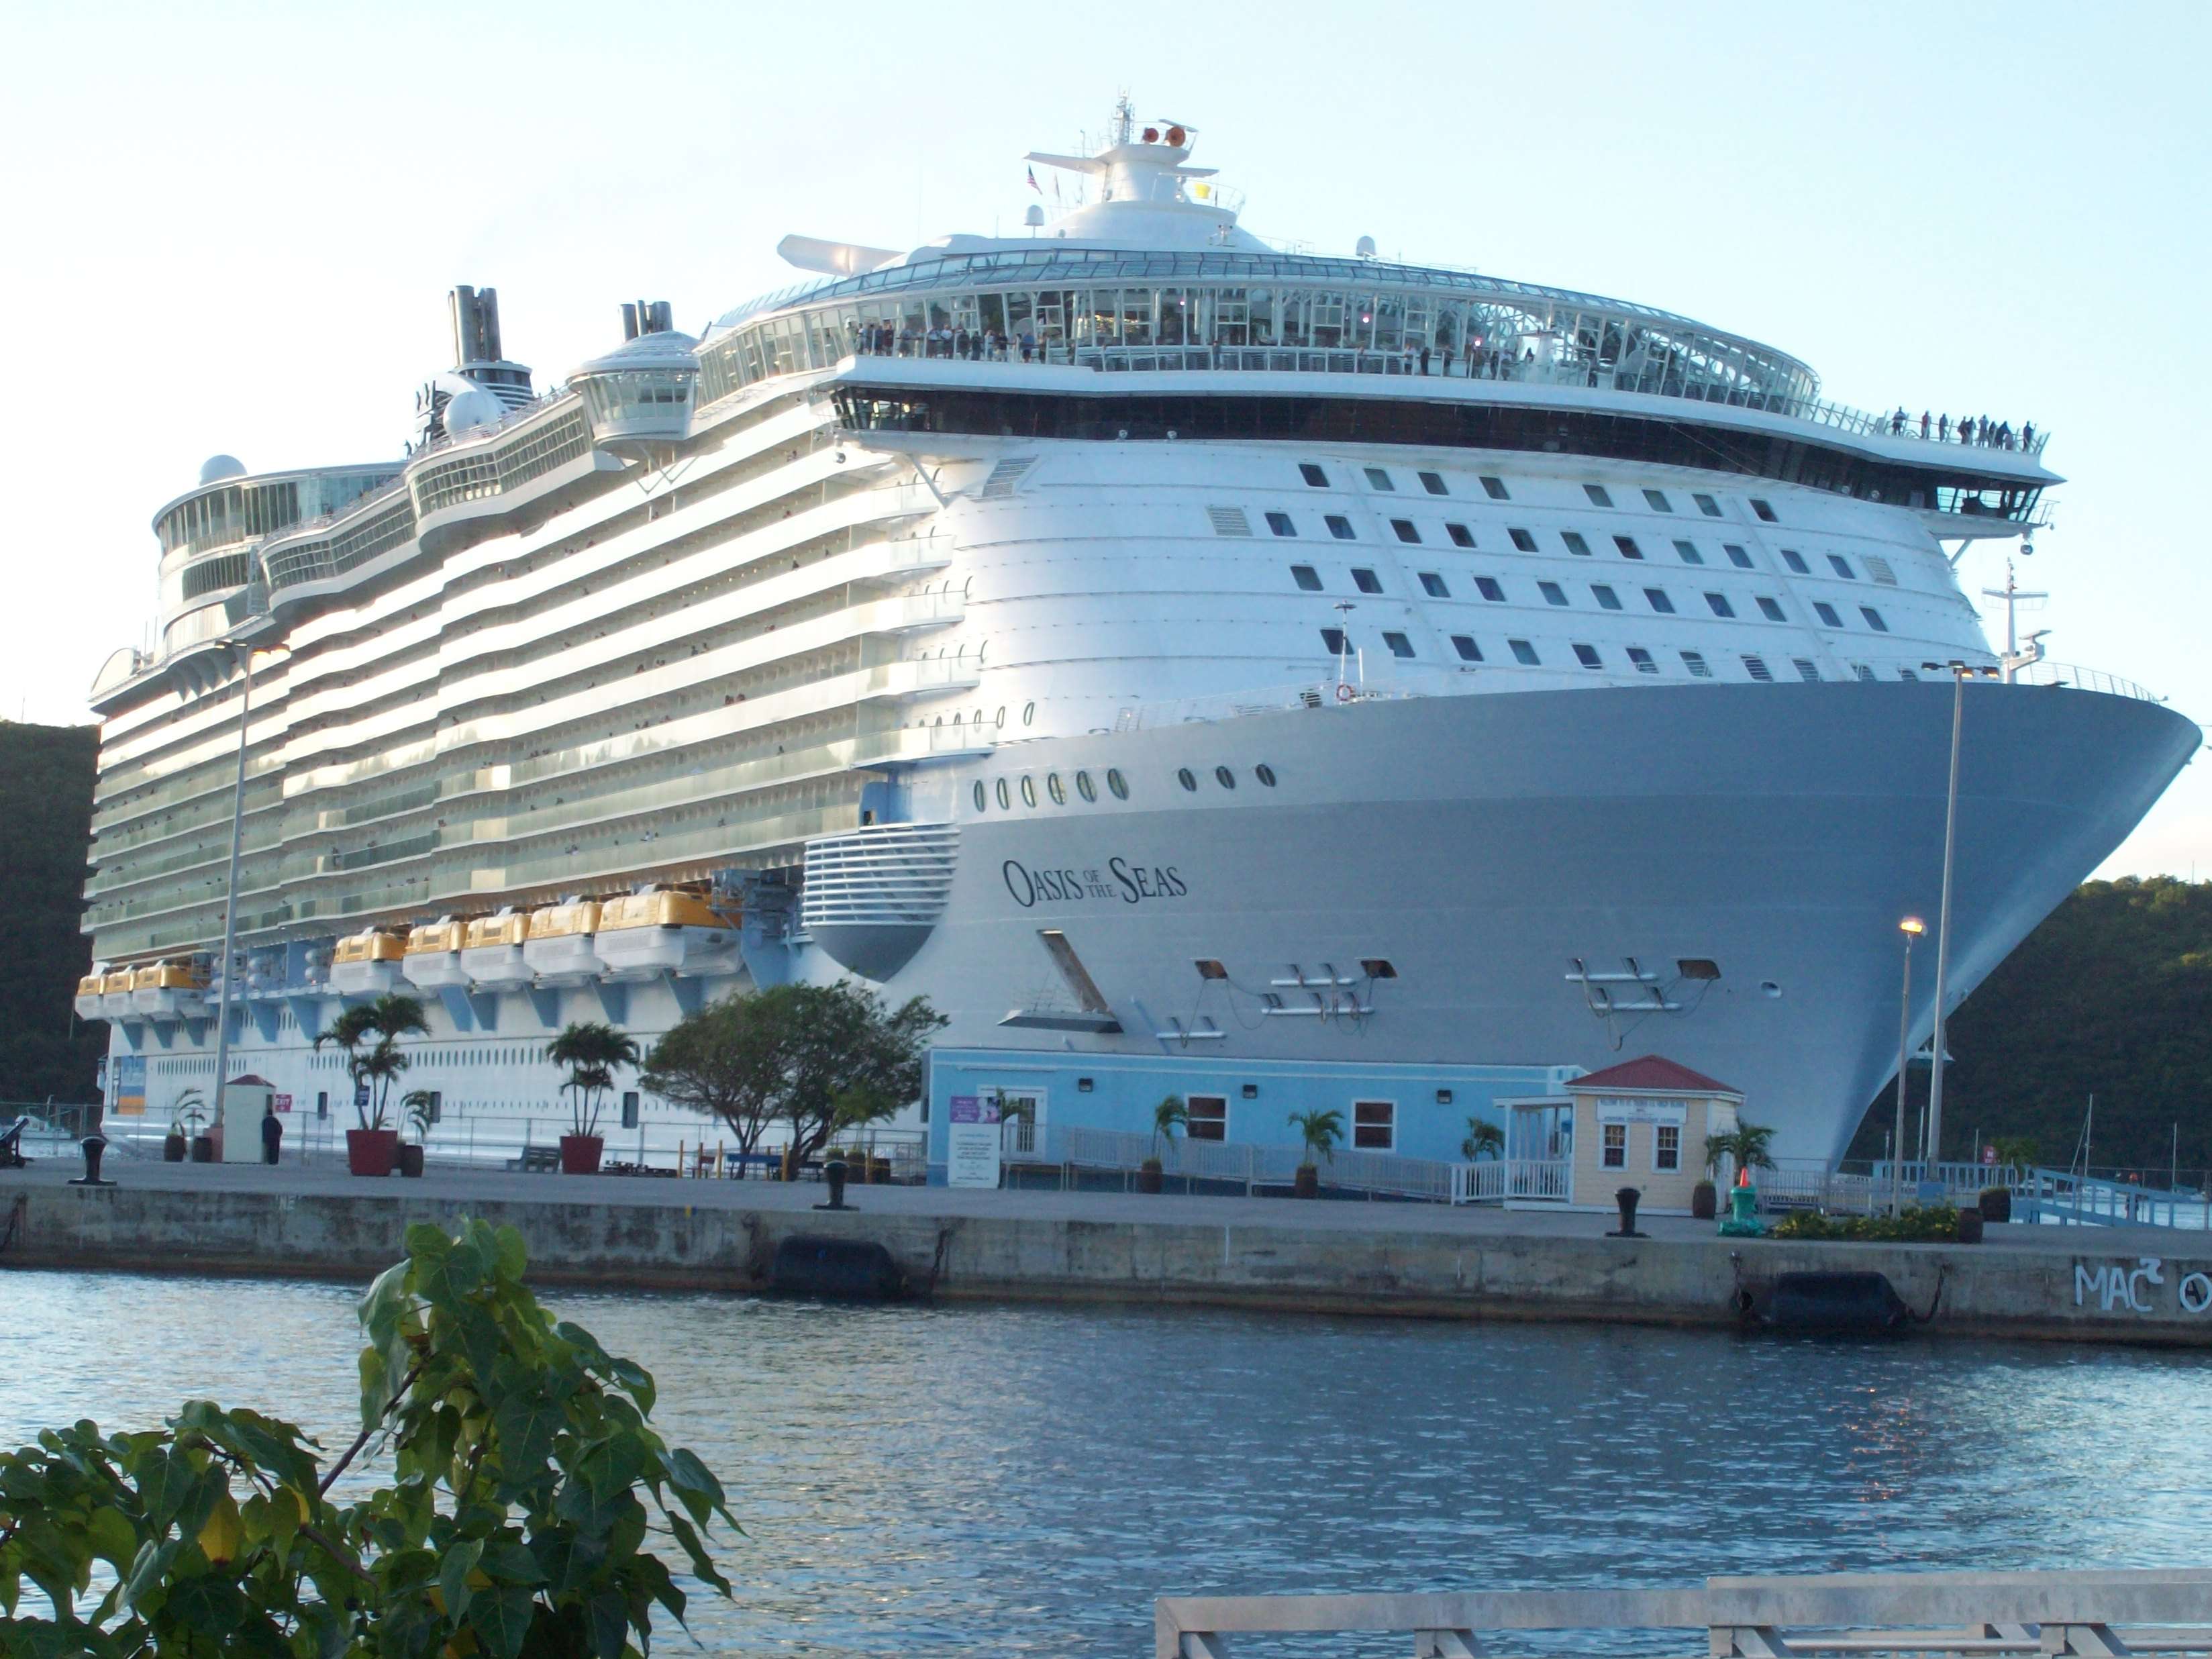 Worlds biggest cruise ship - RIDGID Forum | Plumbing, Woodworking and